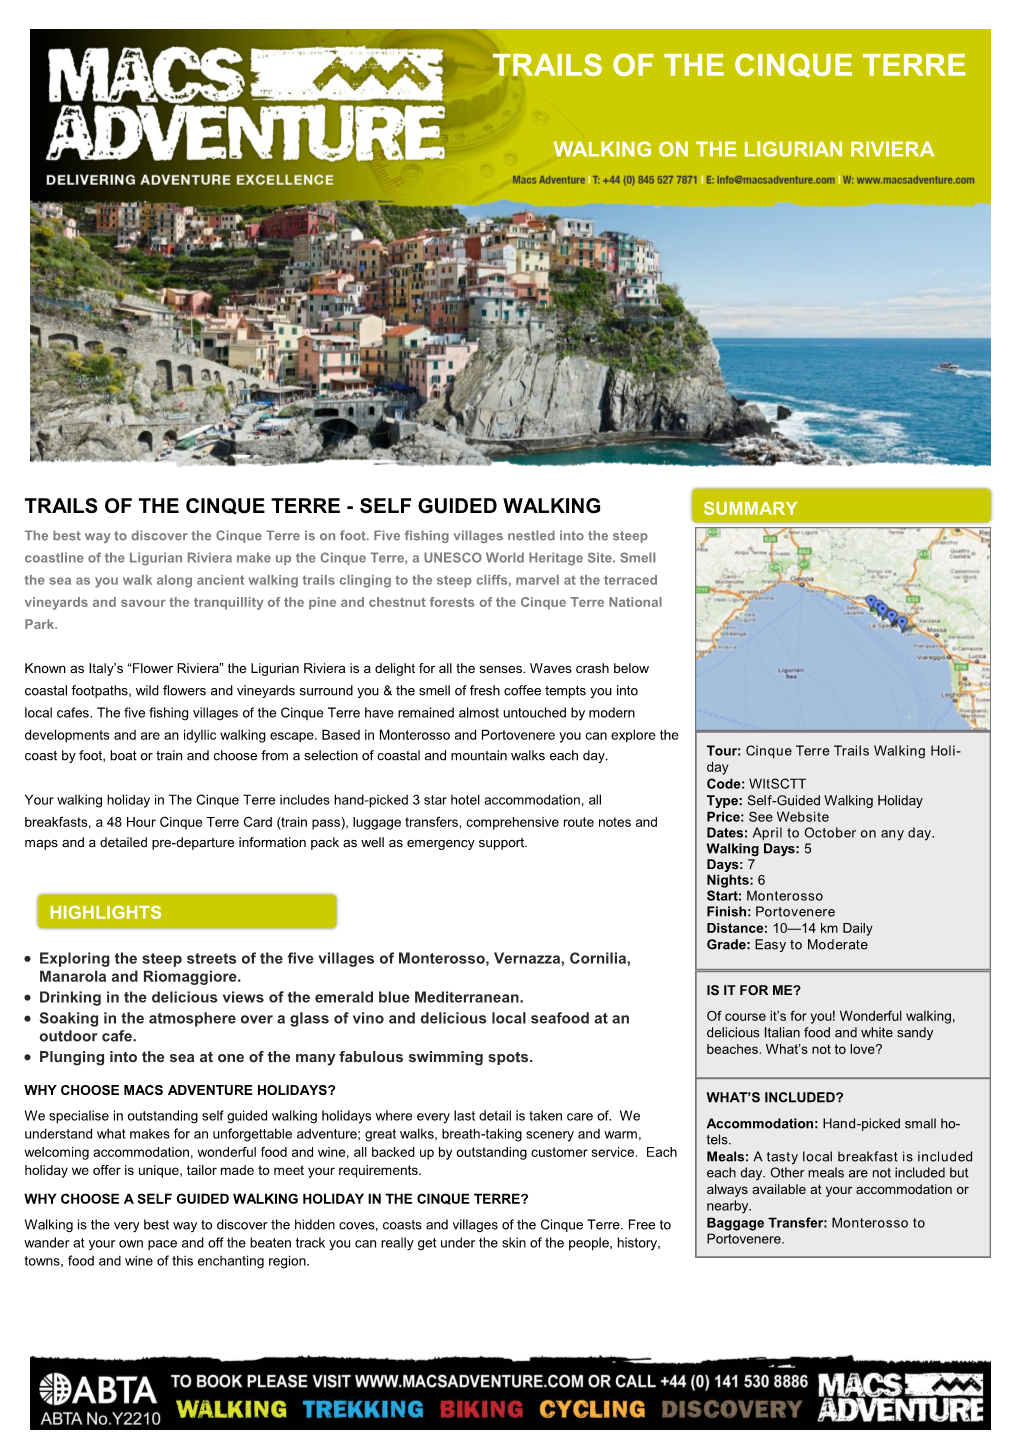 Trails of the Cinque Terre